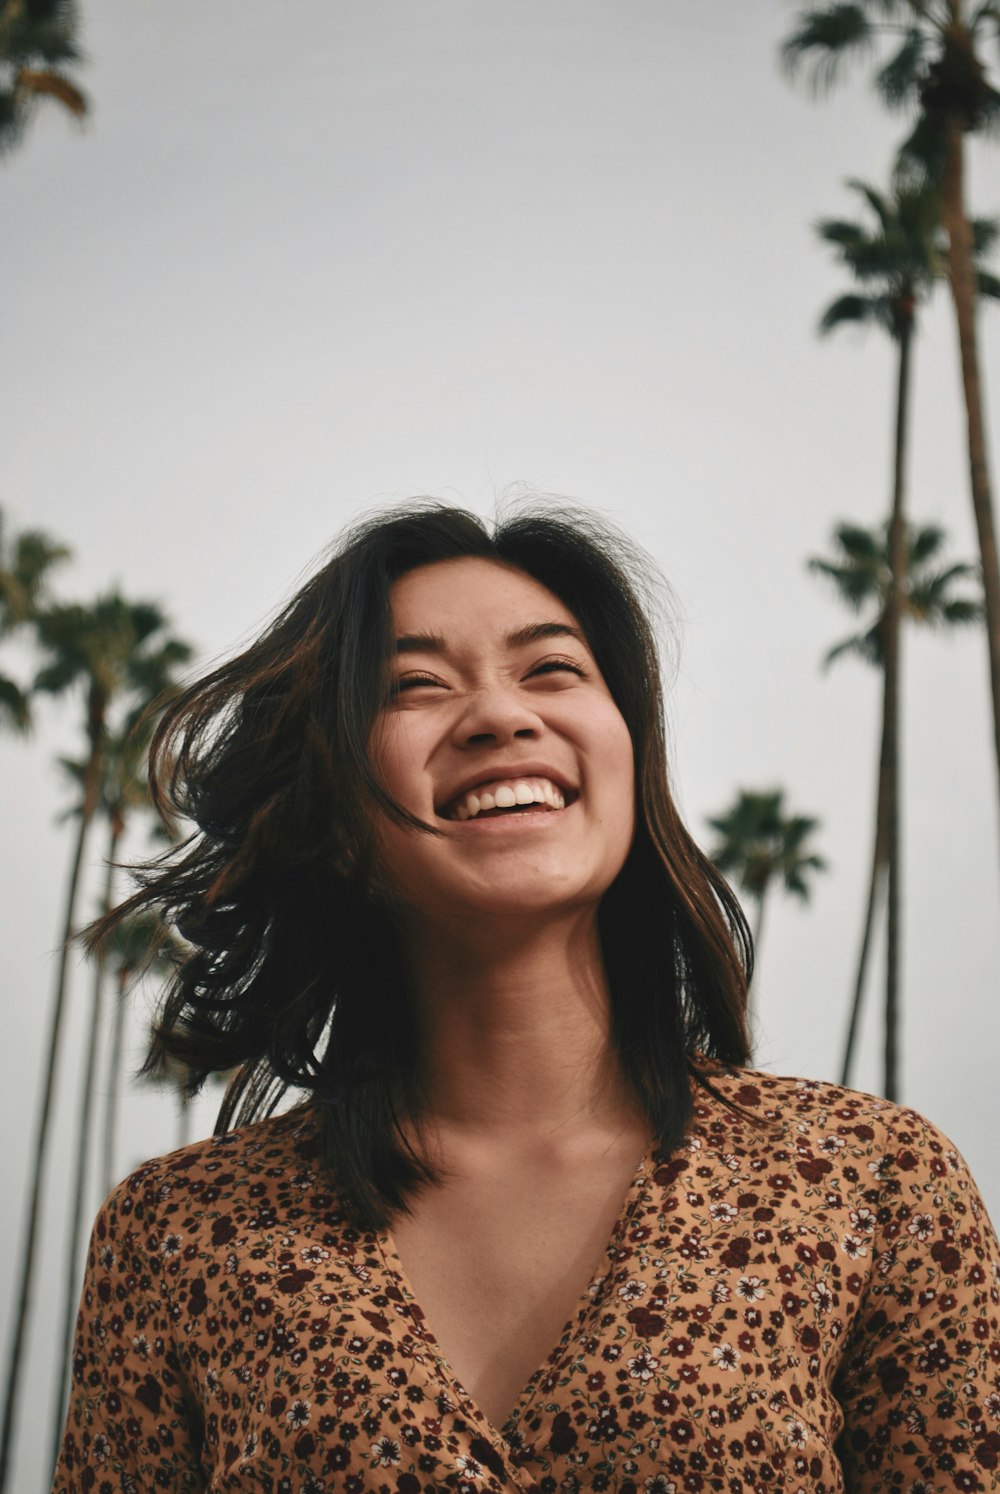 A women smiling